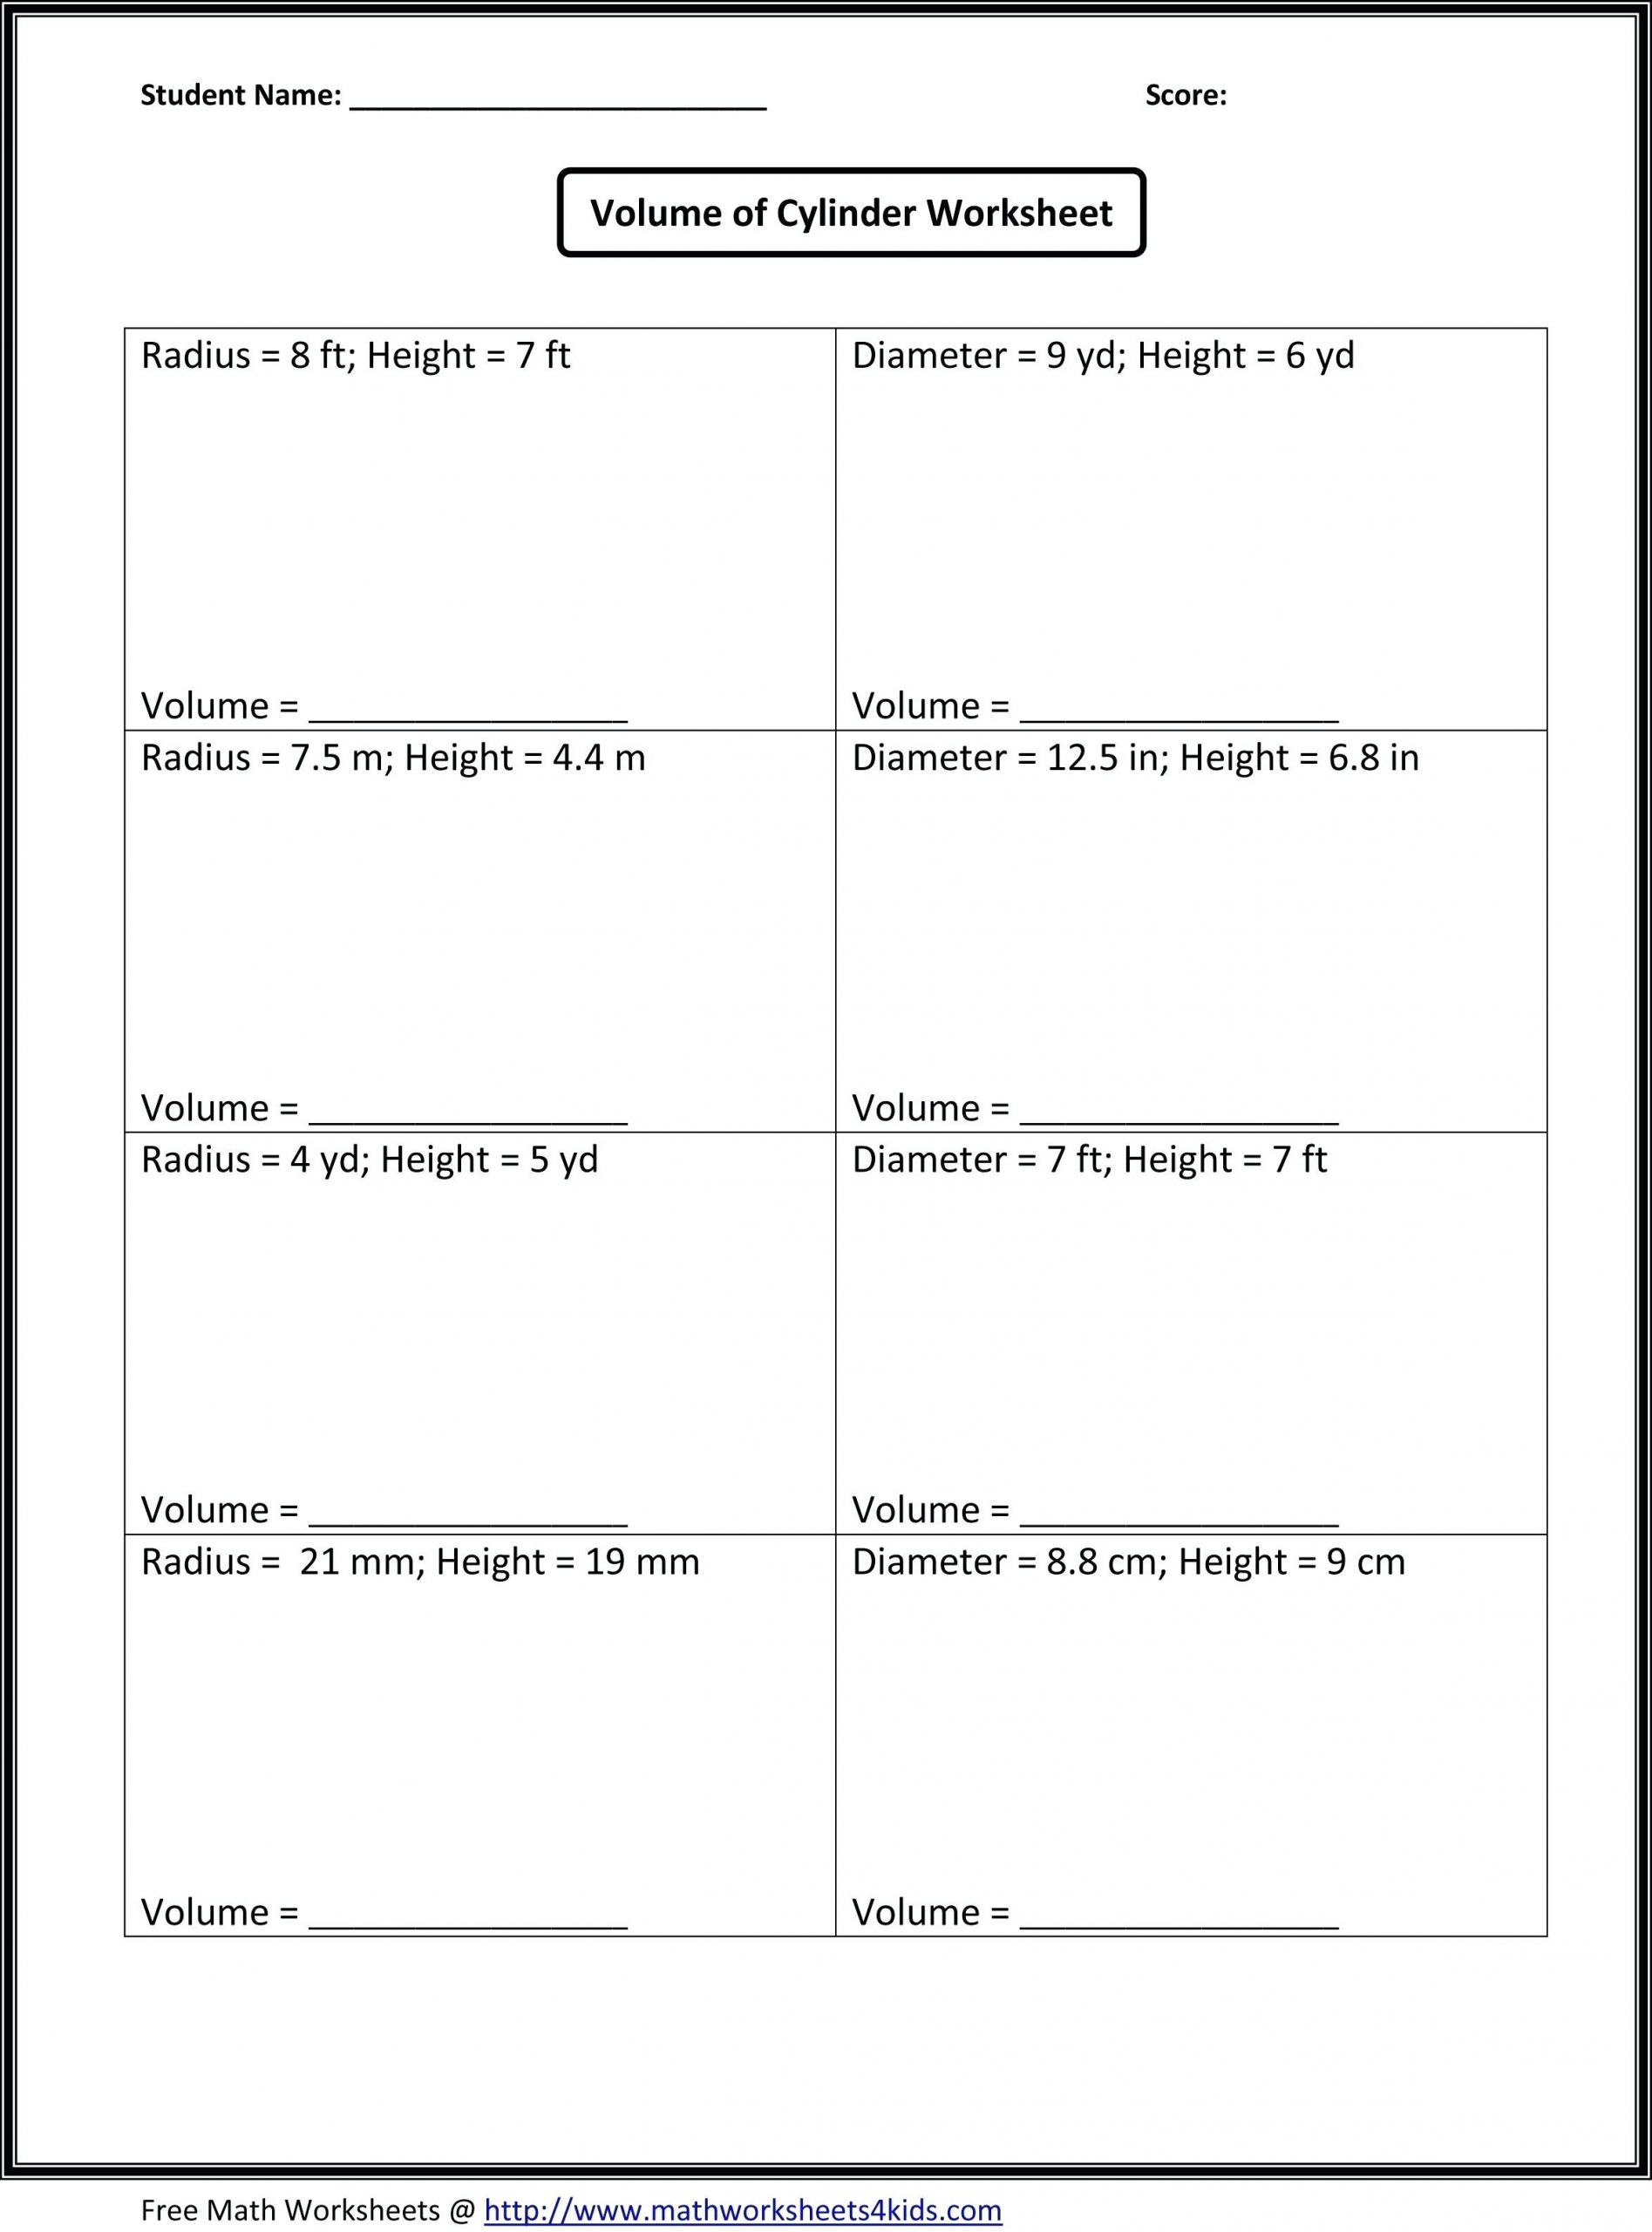 6th grade math worksheet grade math slope worksheets beautiful probability word problems worksheet with answers math fun 6th grade math worksheets printable